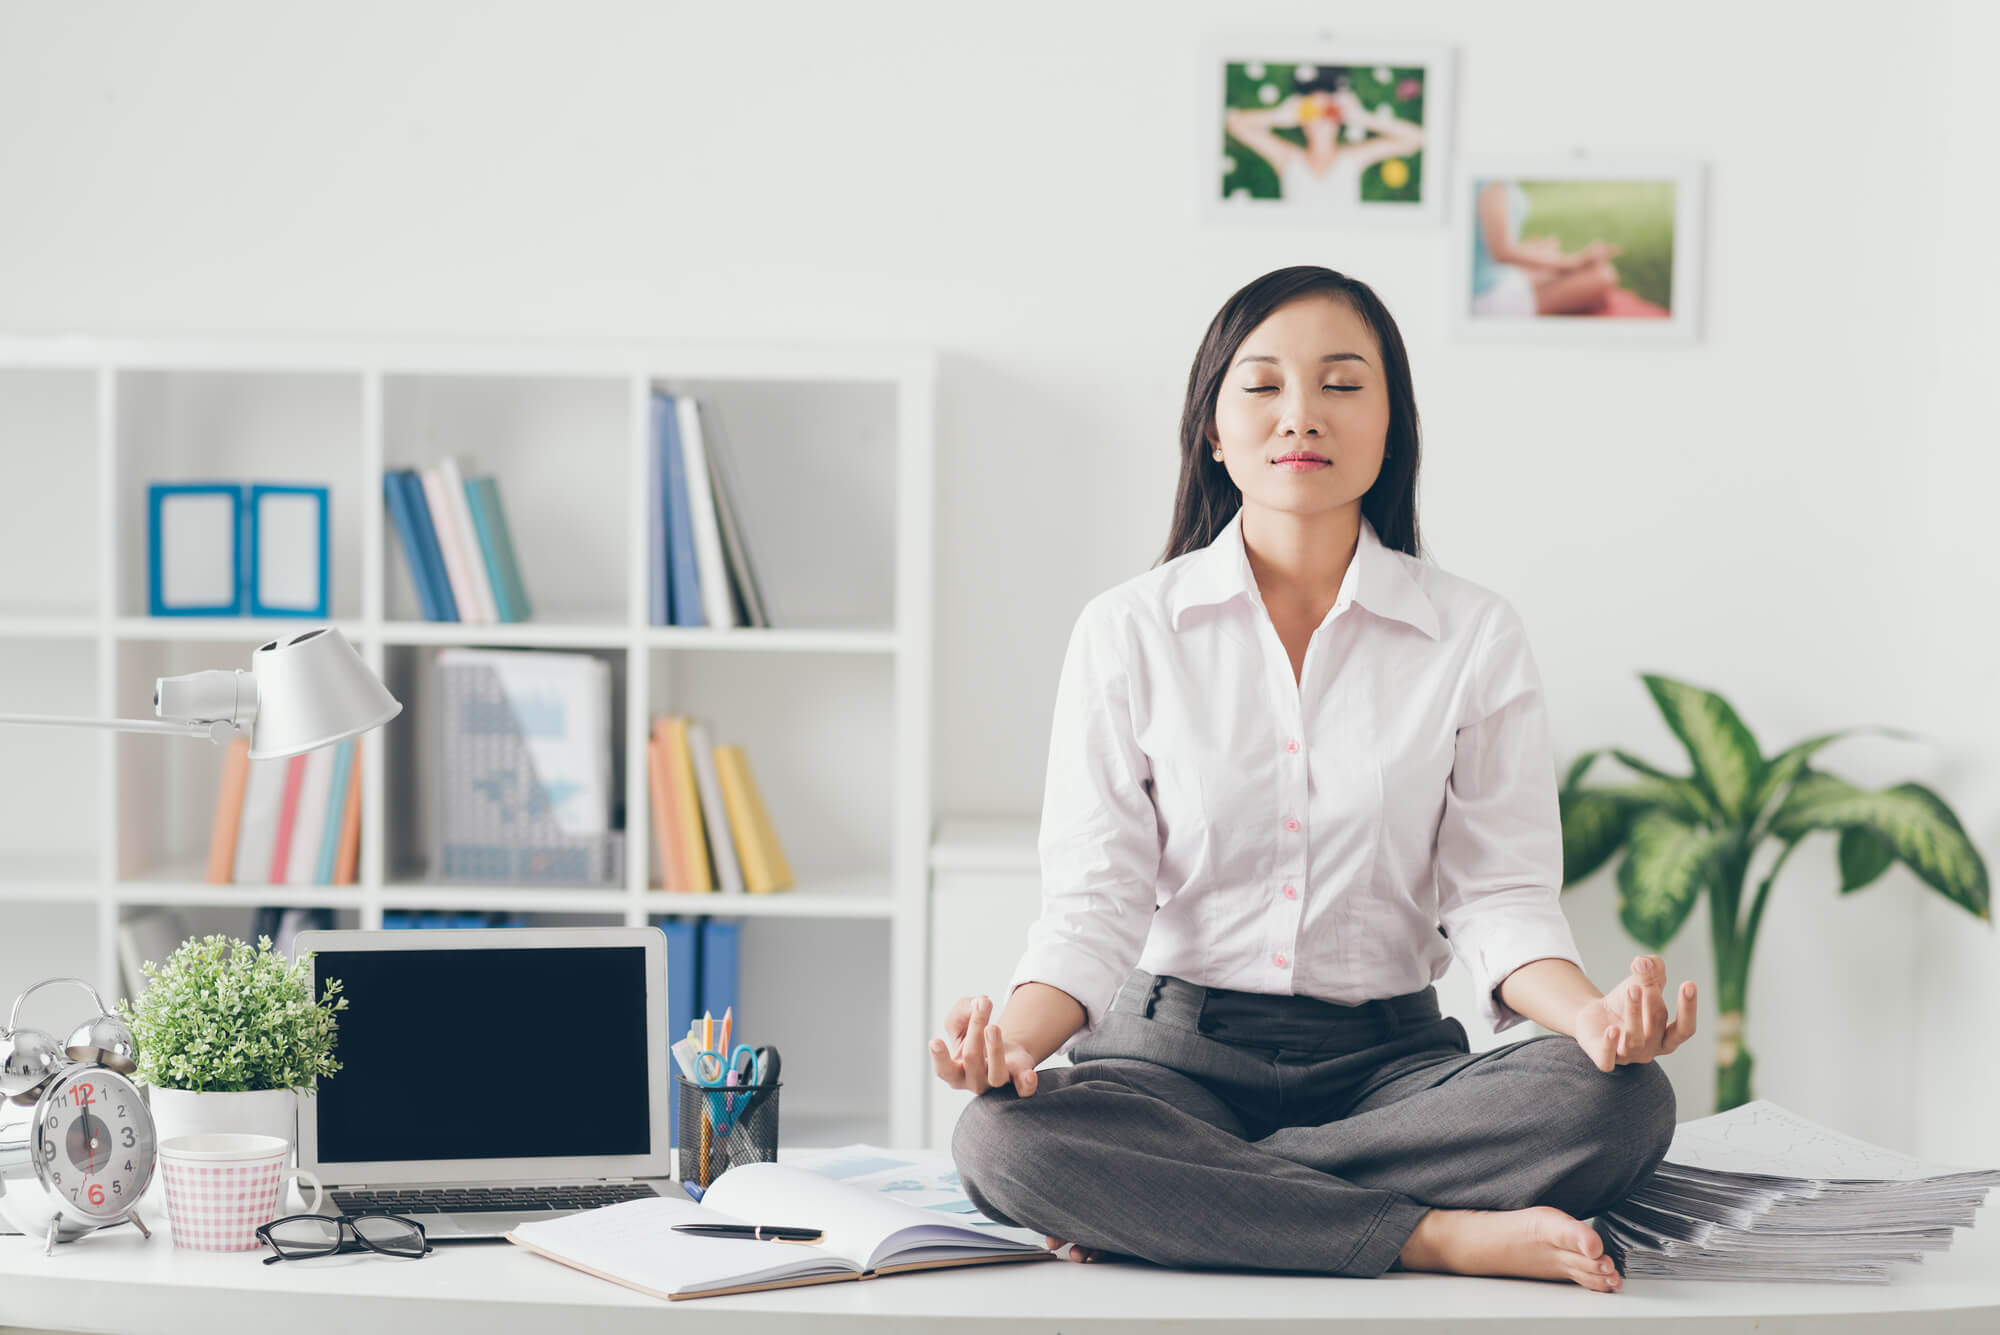 office move checklist- keep calm. Woman sitting on work desk doing meditation